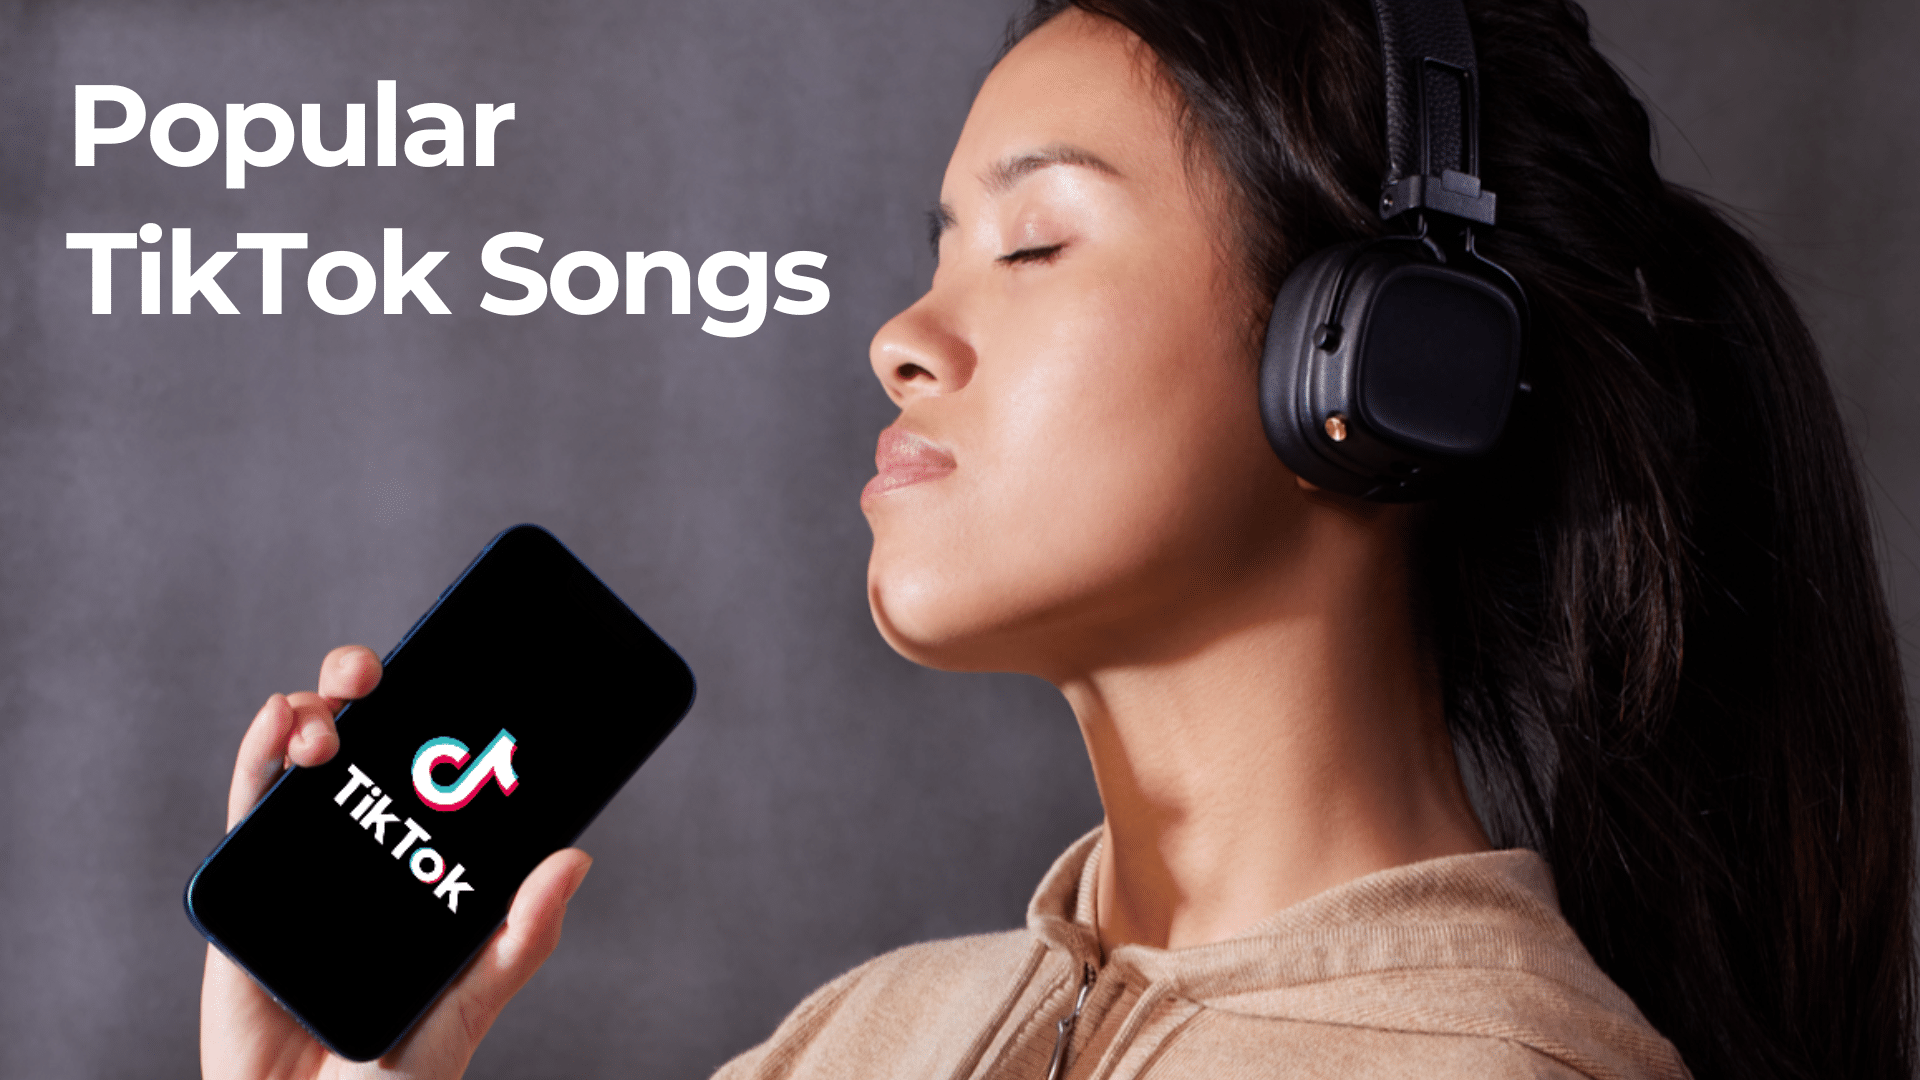 The Most Popular TikTok Songs